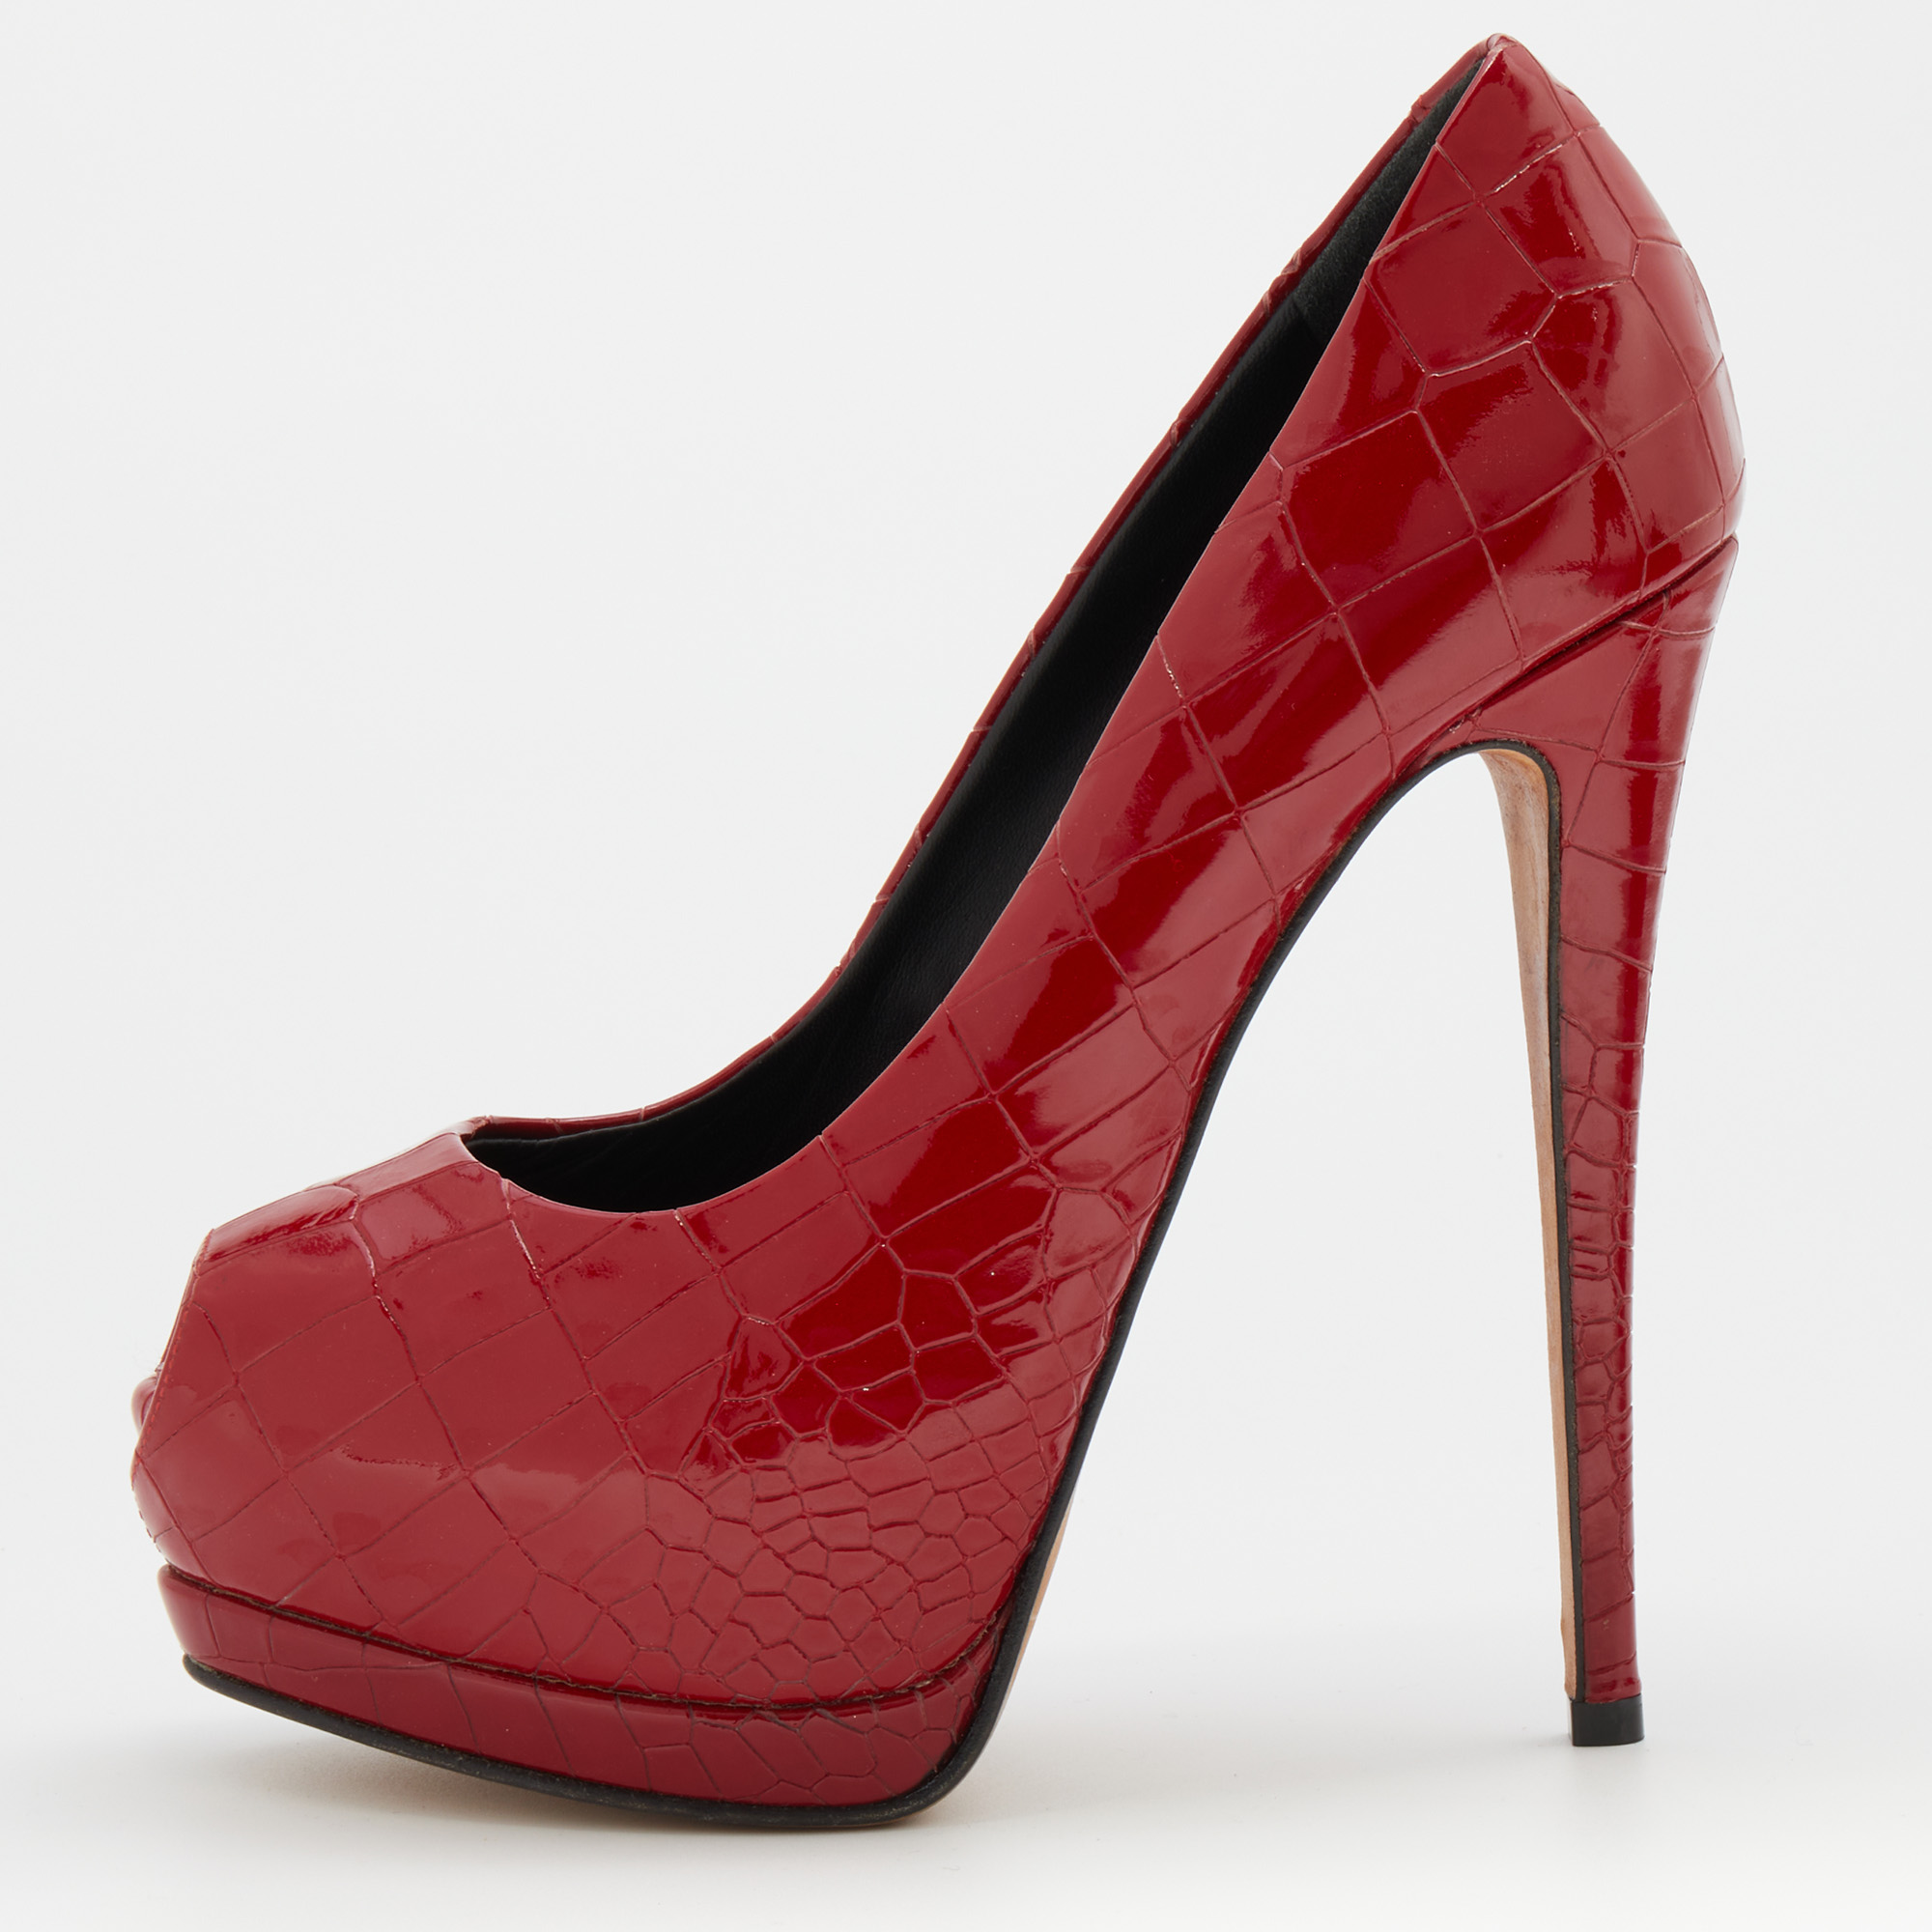 Giuseppe zanotti red croc embossed patent leather peep toe platform pumps size 37